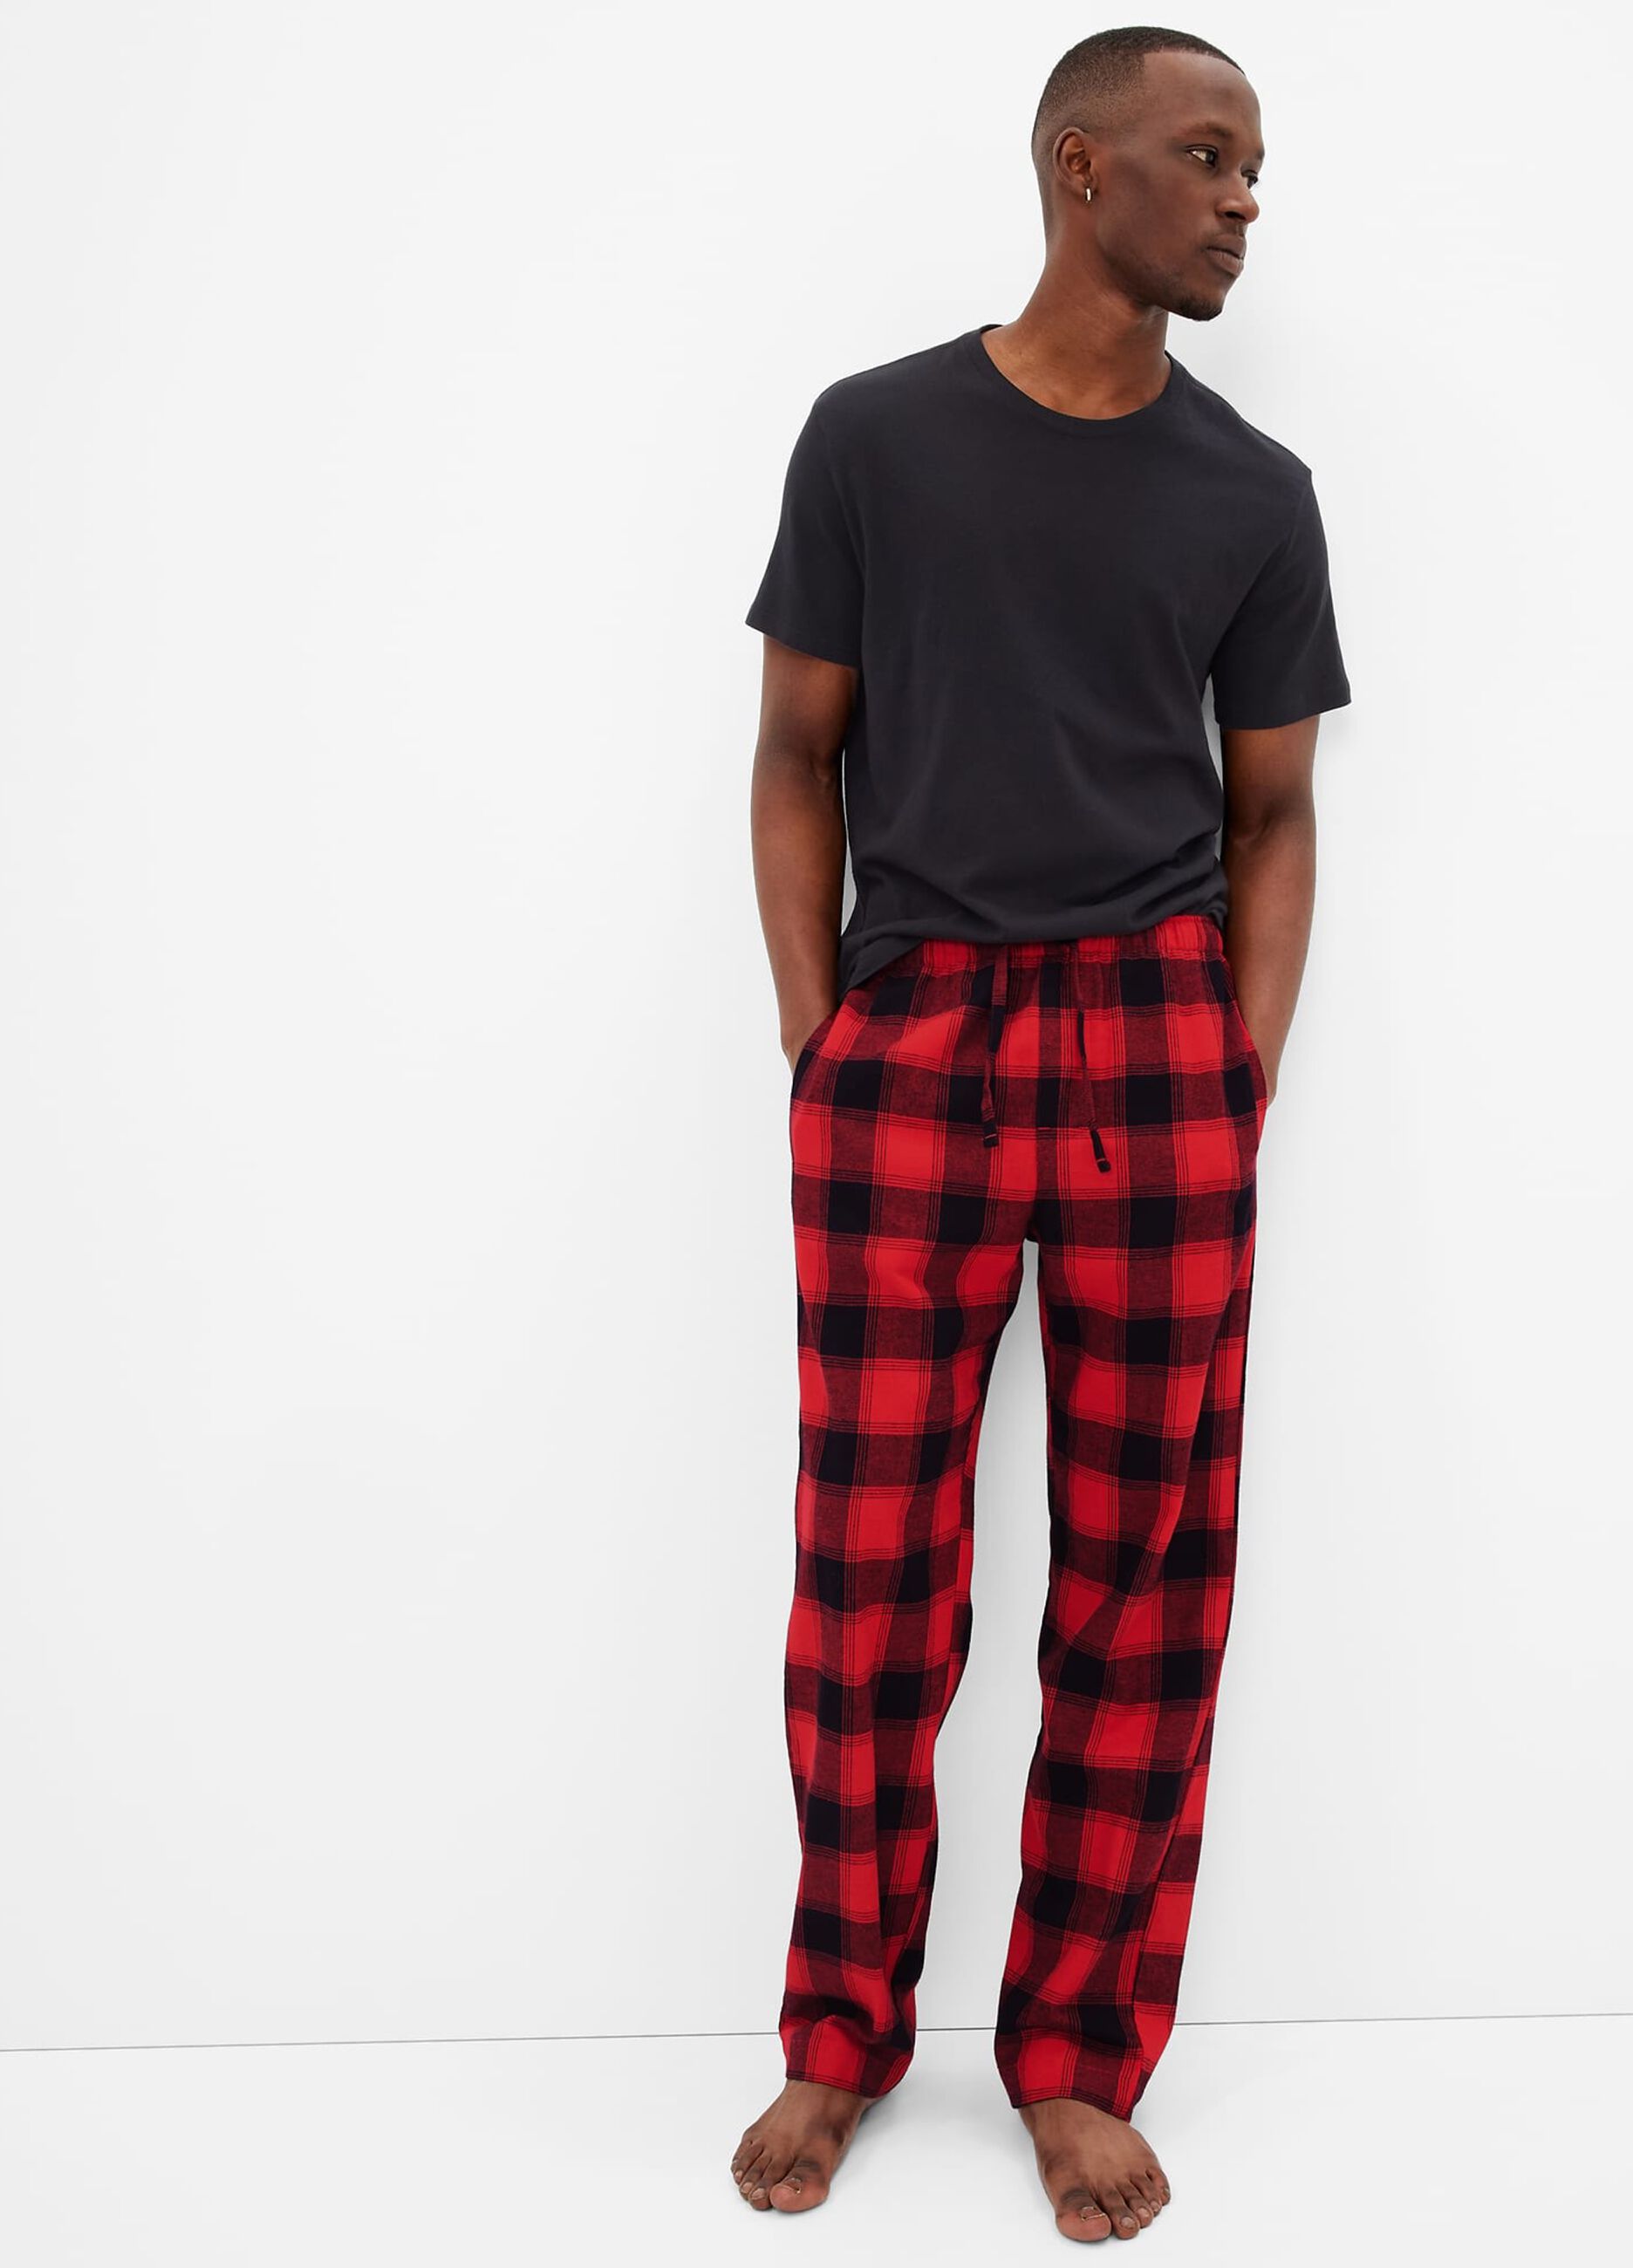 Full-length pyjama bottoms in check flannel